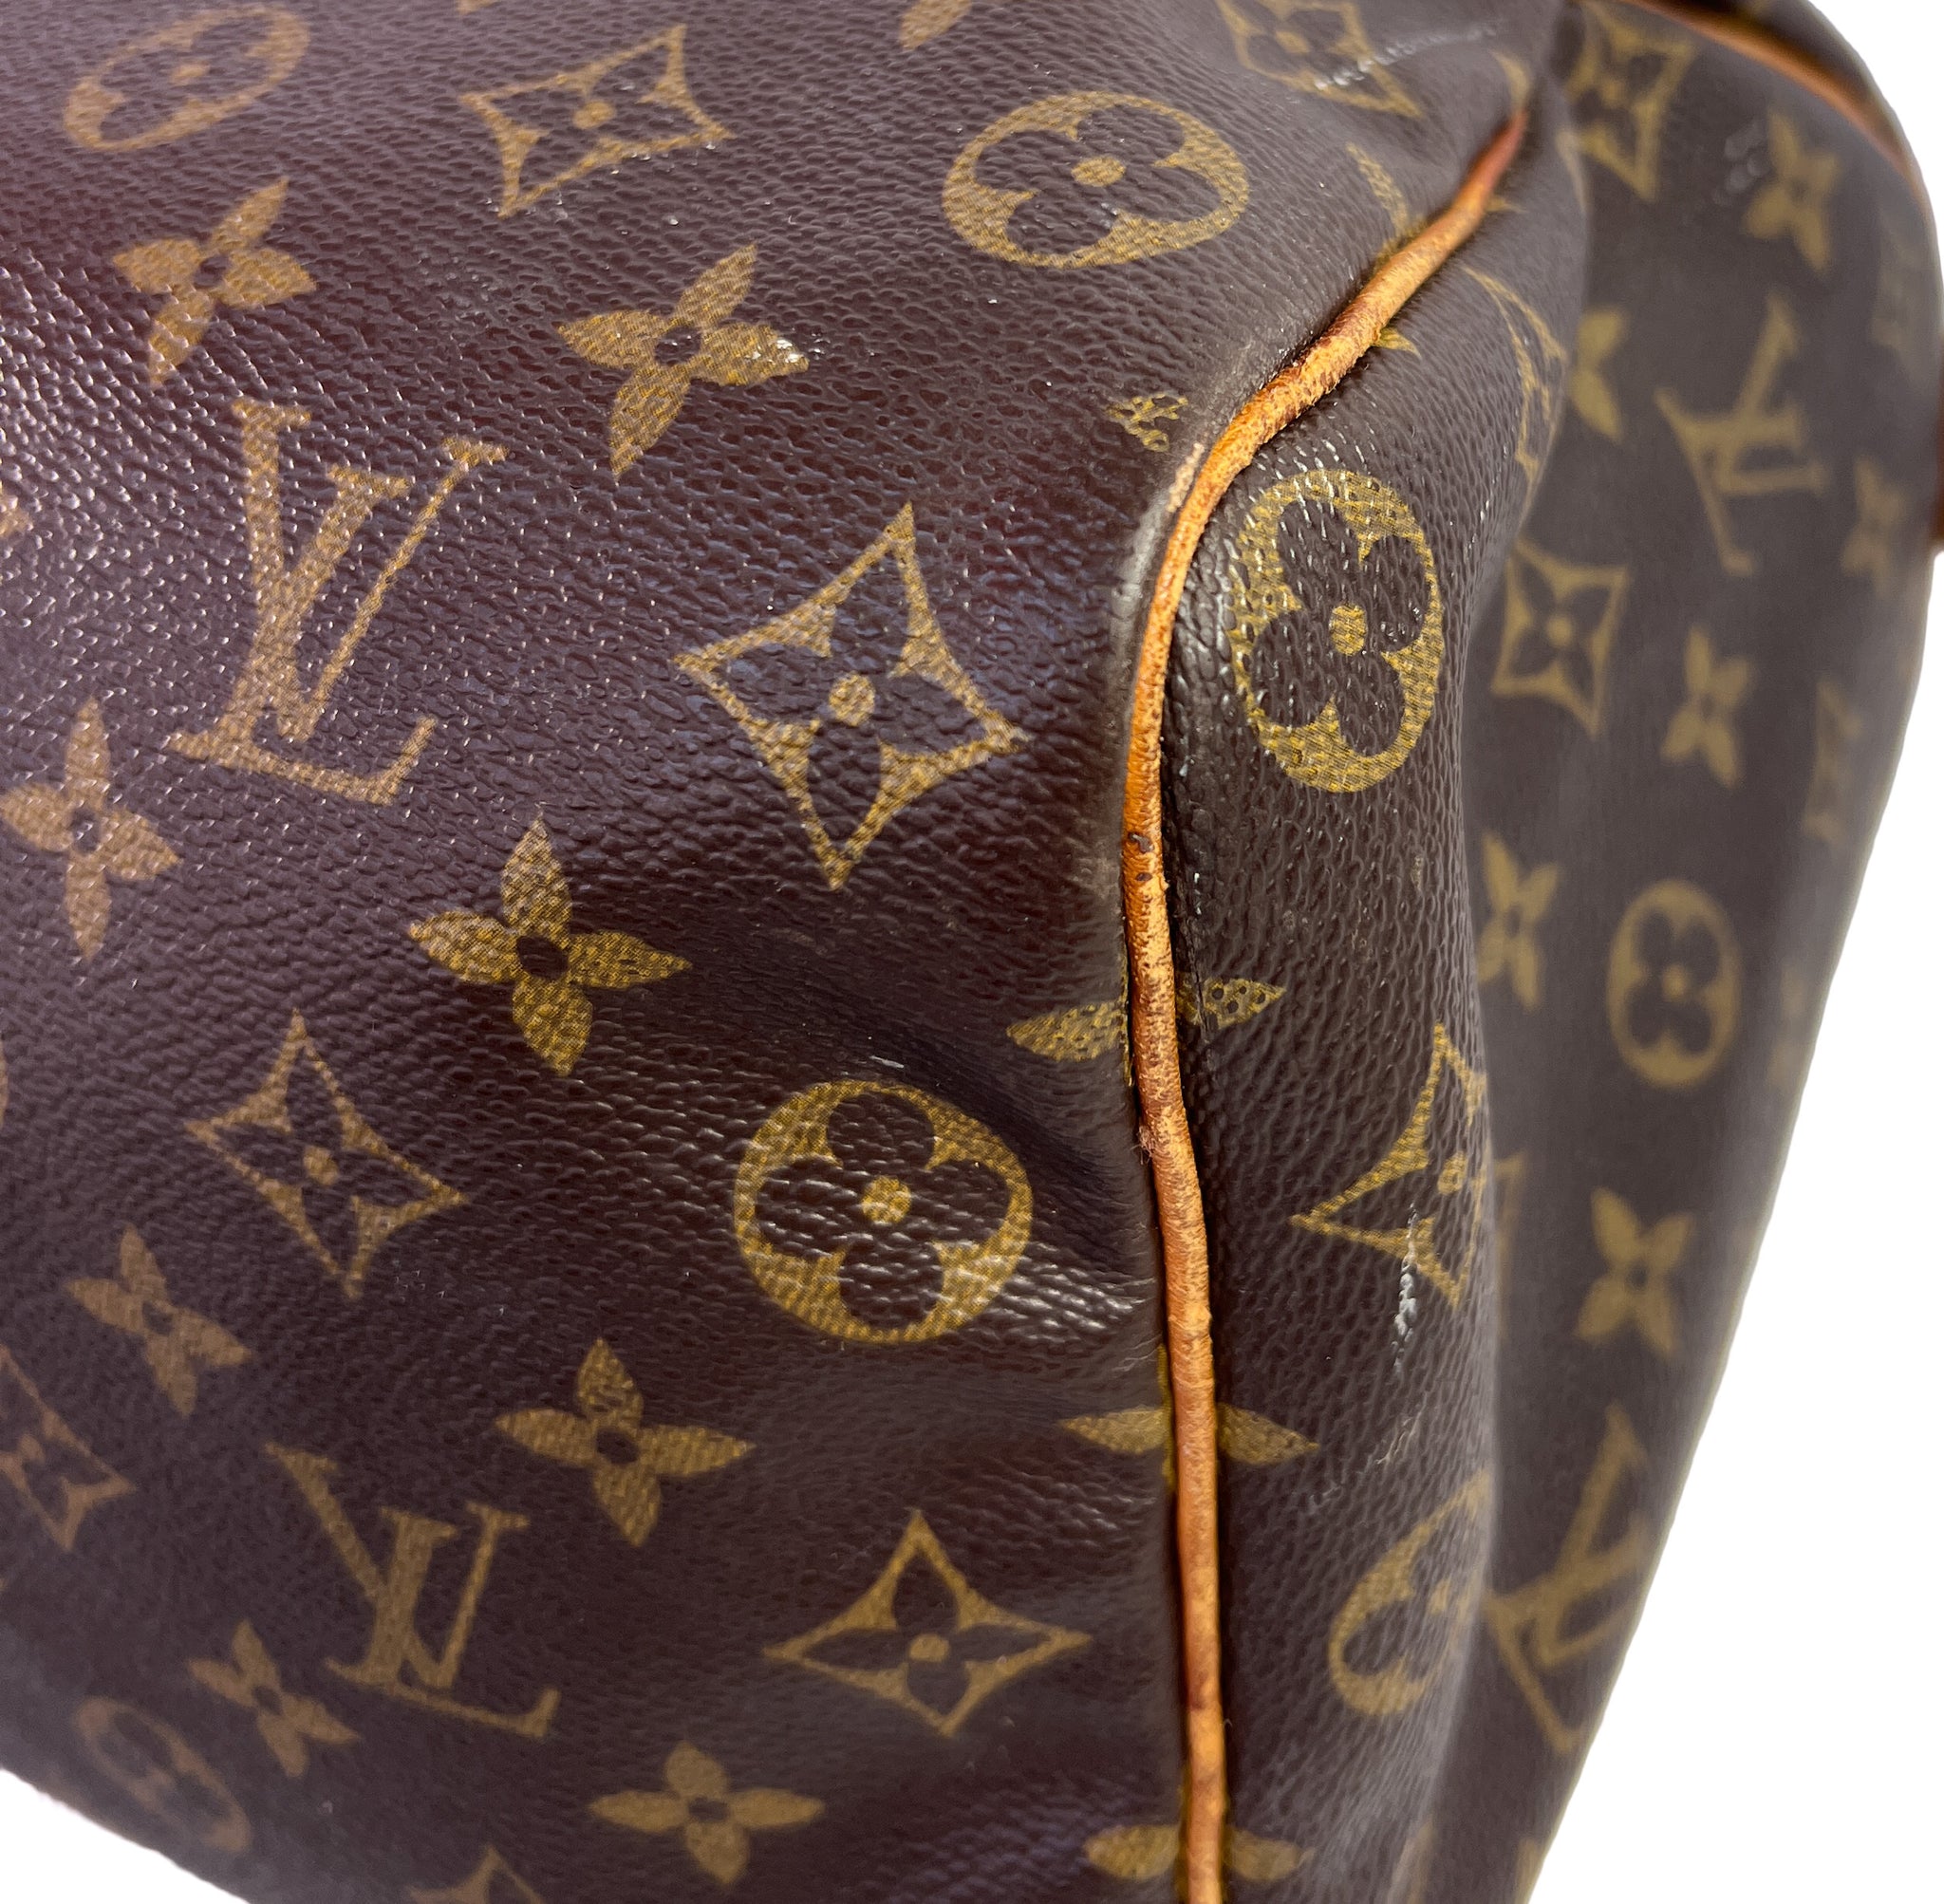 Authentic Louis Vuitton Monogram Speedy 35 Hand Bag Purse MB 0012